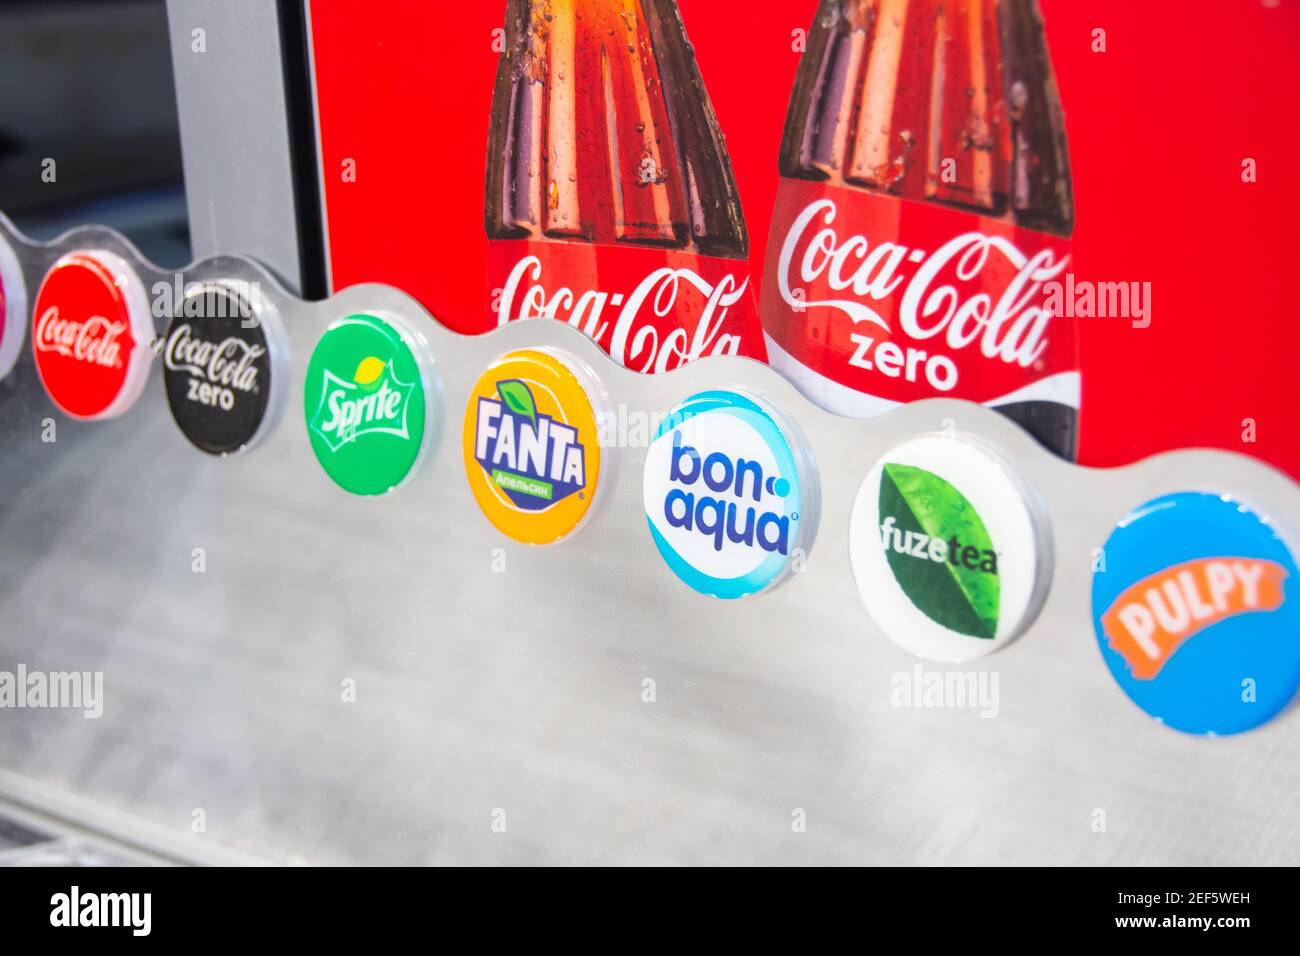 Drinks on tap in the fast food area of the mall. Coca Cola, Zero, Srite, Fanta, Bon Aqua, Fuze tea, Pulpy juce. Russia, Saint-Petersburg, 10 february Stock Photo